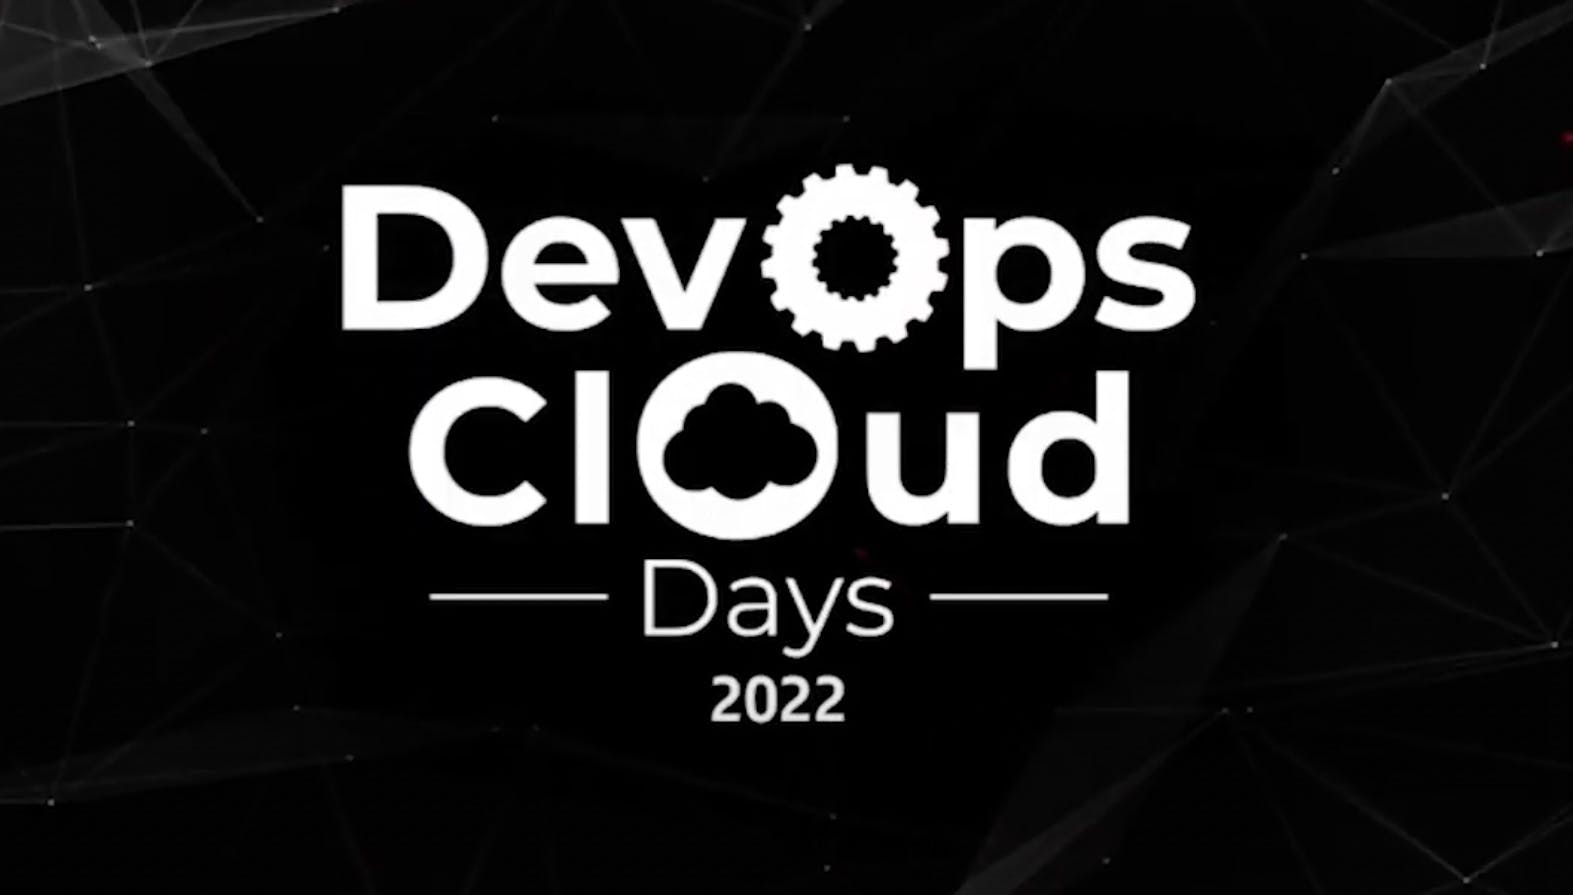 Cerbos @ Cloud DevOps Days 2022